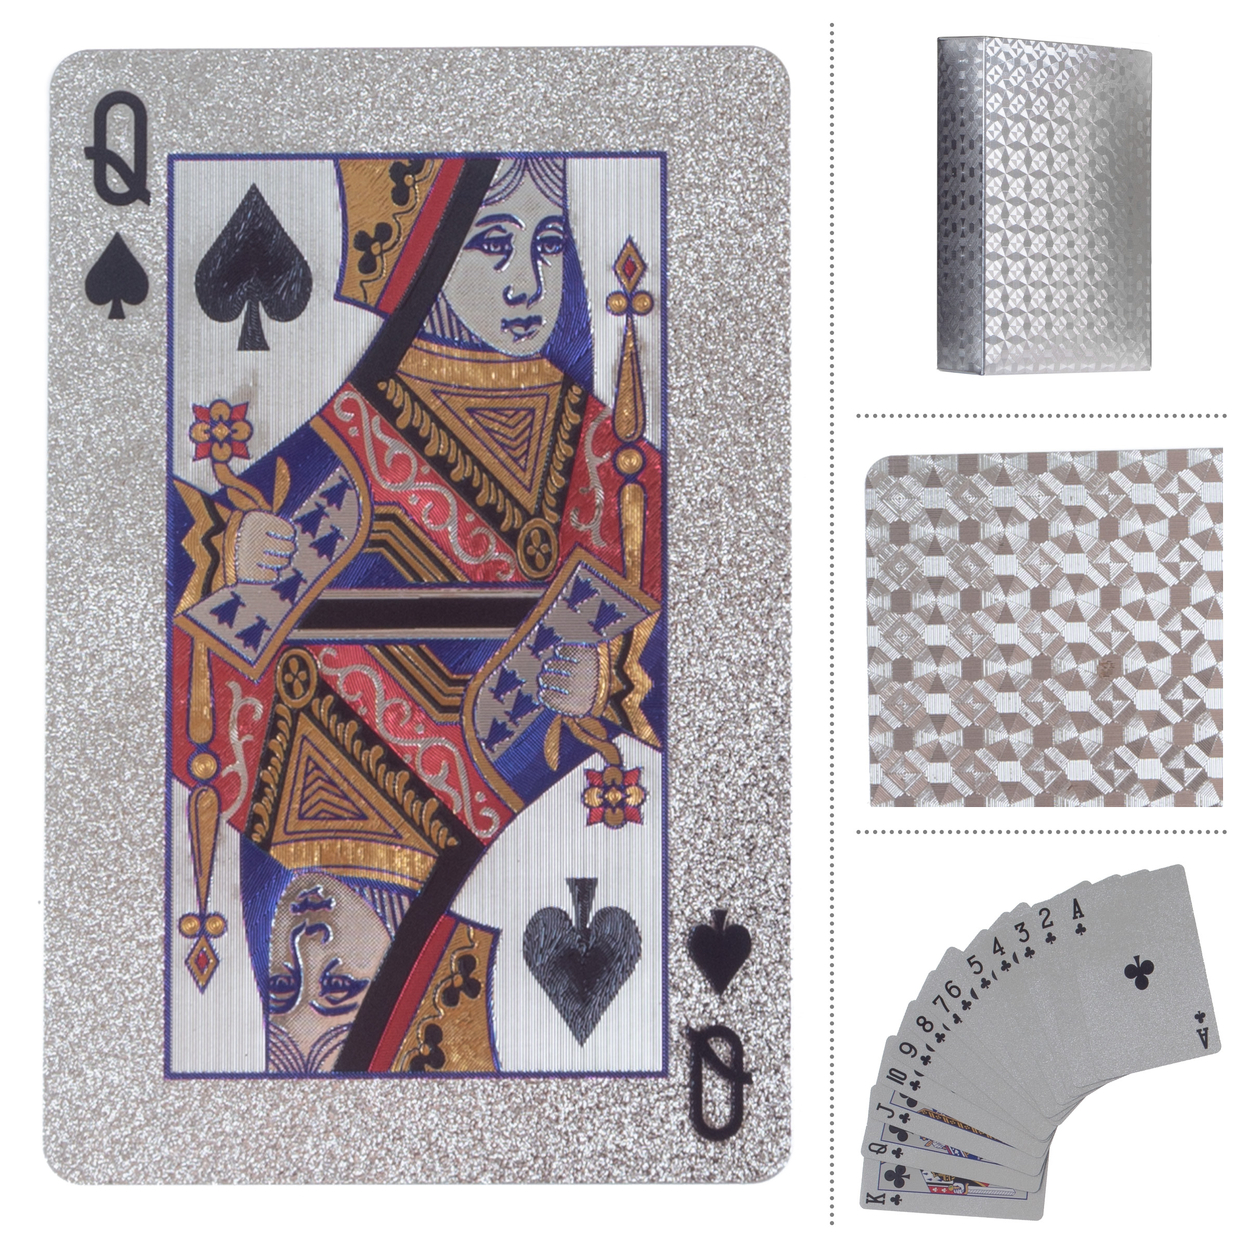 4 Pack Play Cards Waterproof Durable Scratch Resistant Poker Bridge Size